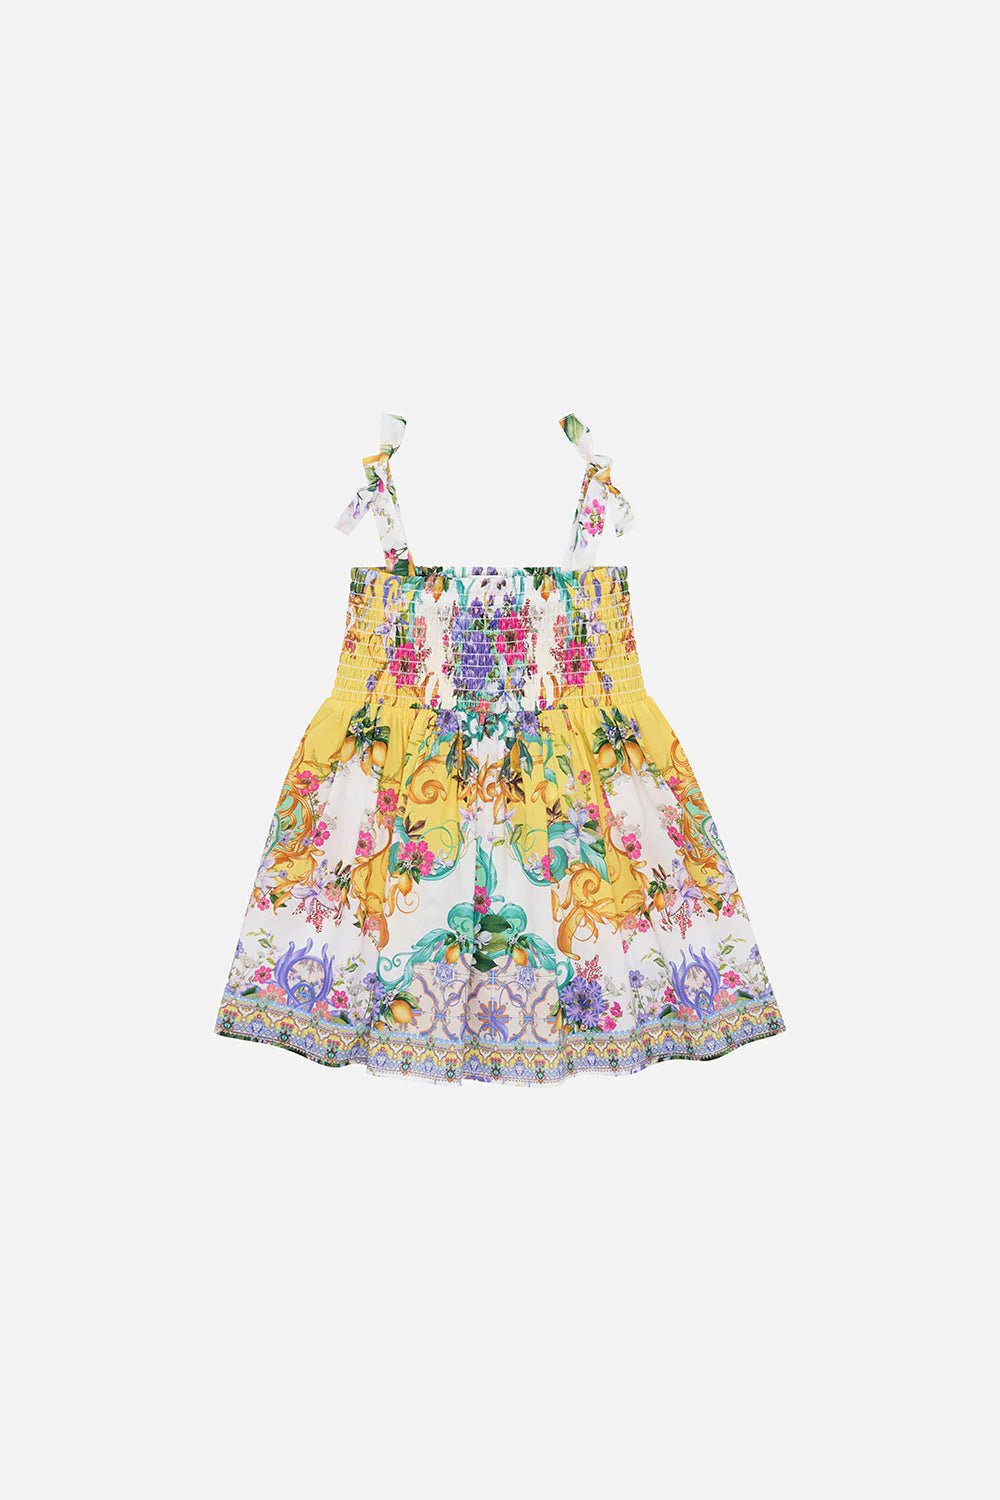 CAMILLA Babies Dress With Shirring Caterina Spritz - Camilla - Pinkhill - darwin fashion - darwin boutique